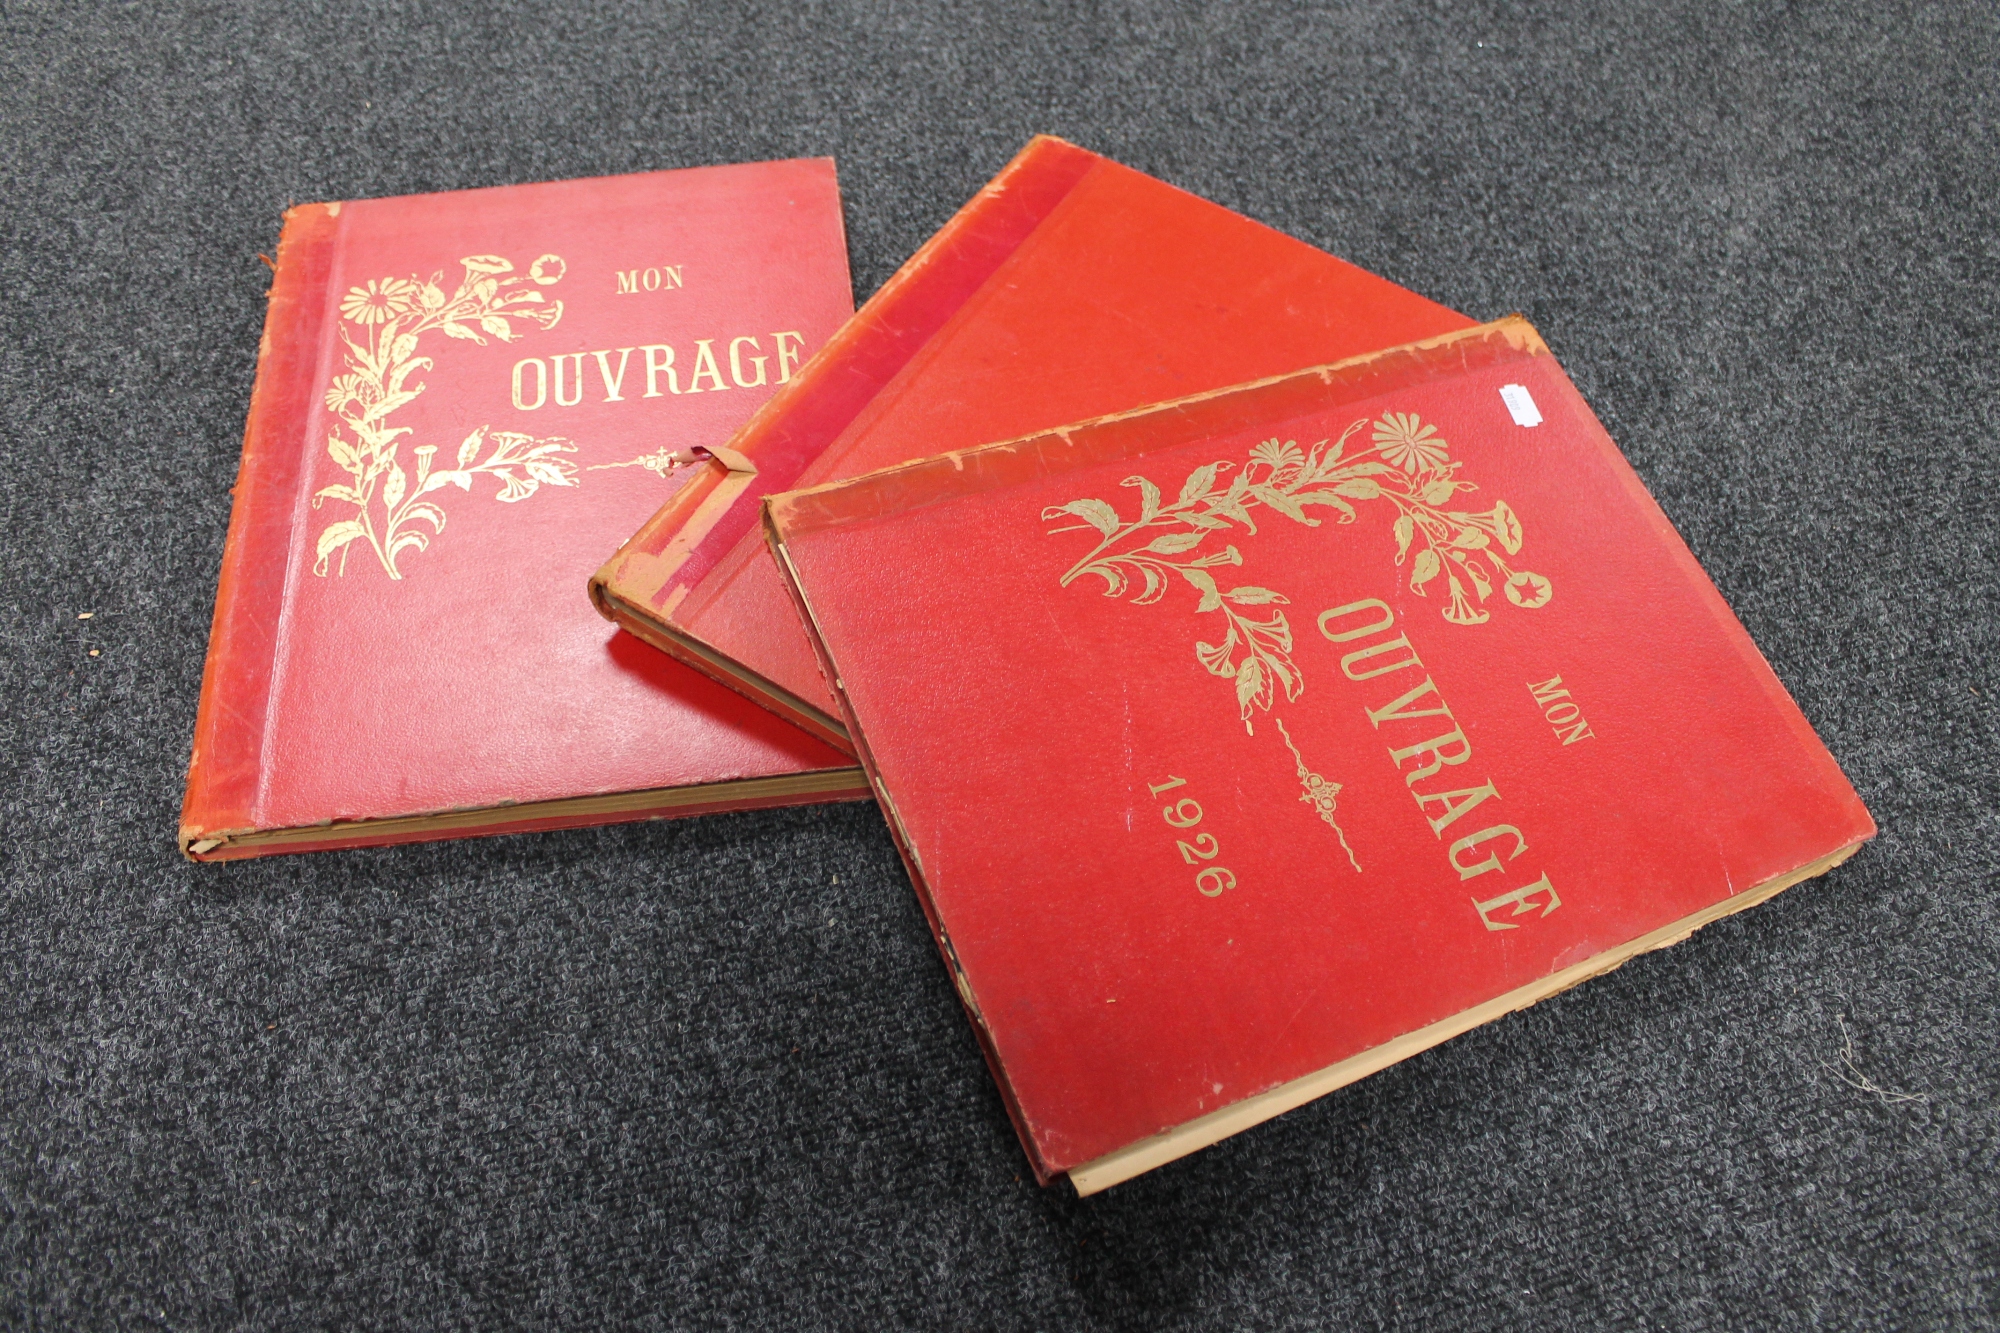 Three French 1920's volumes